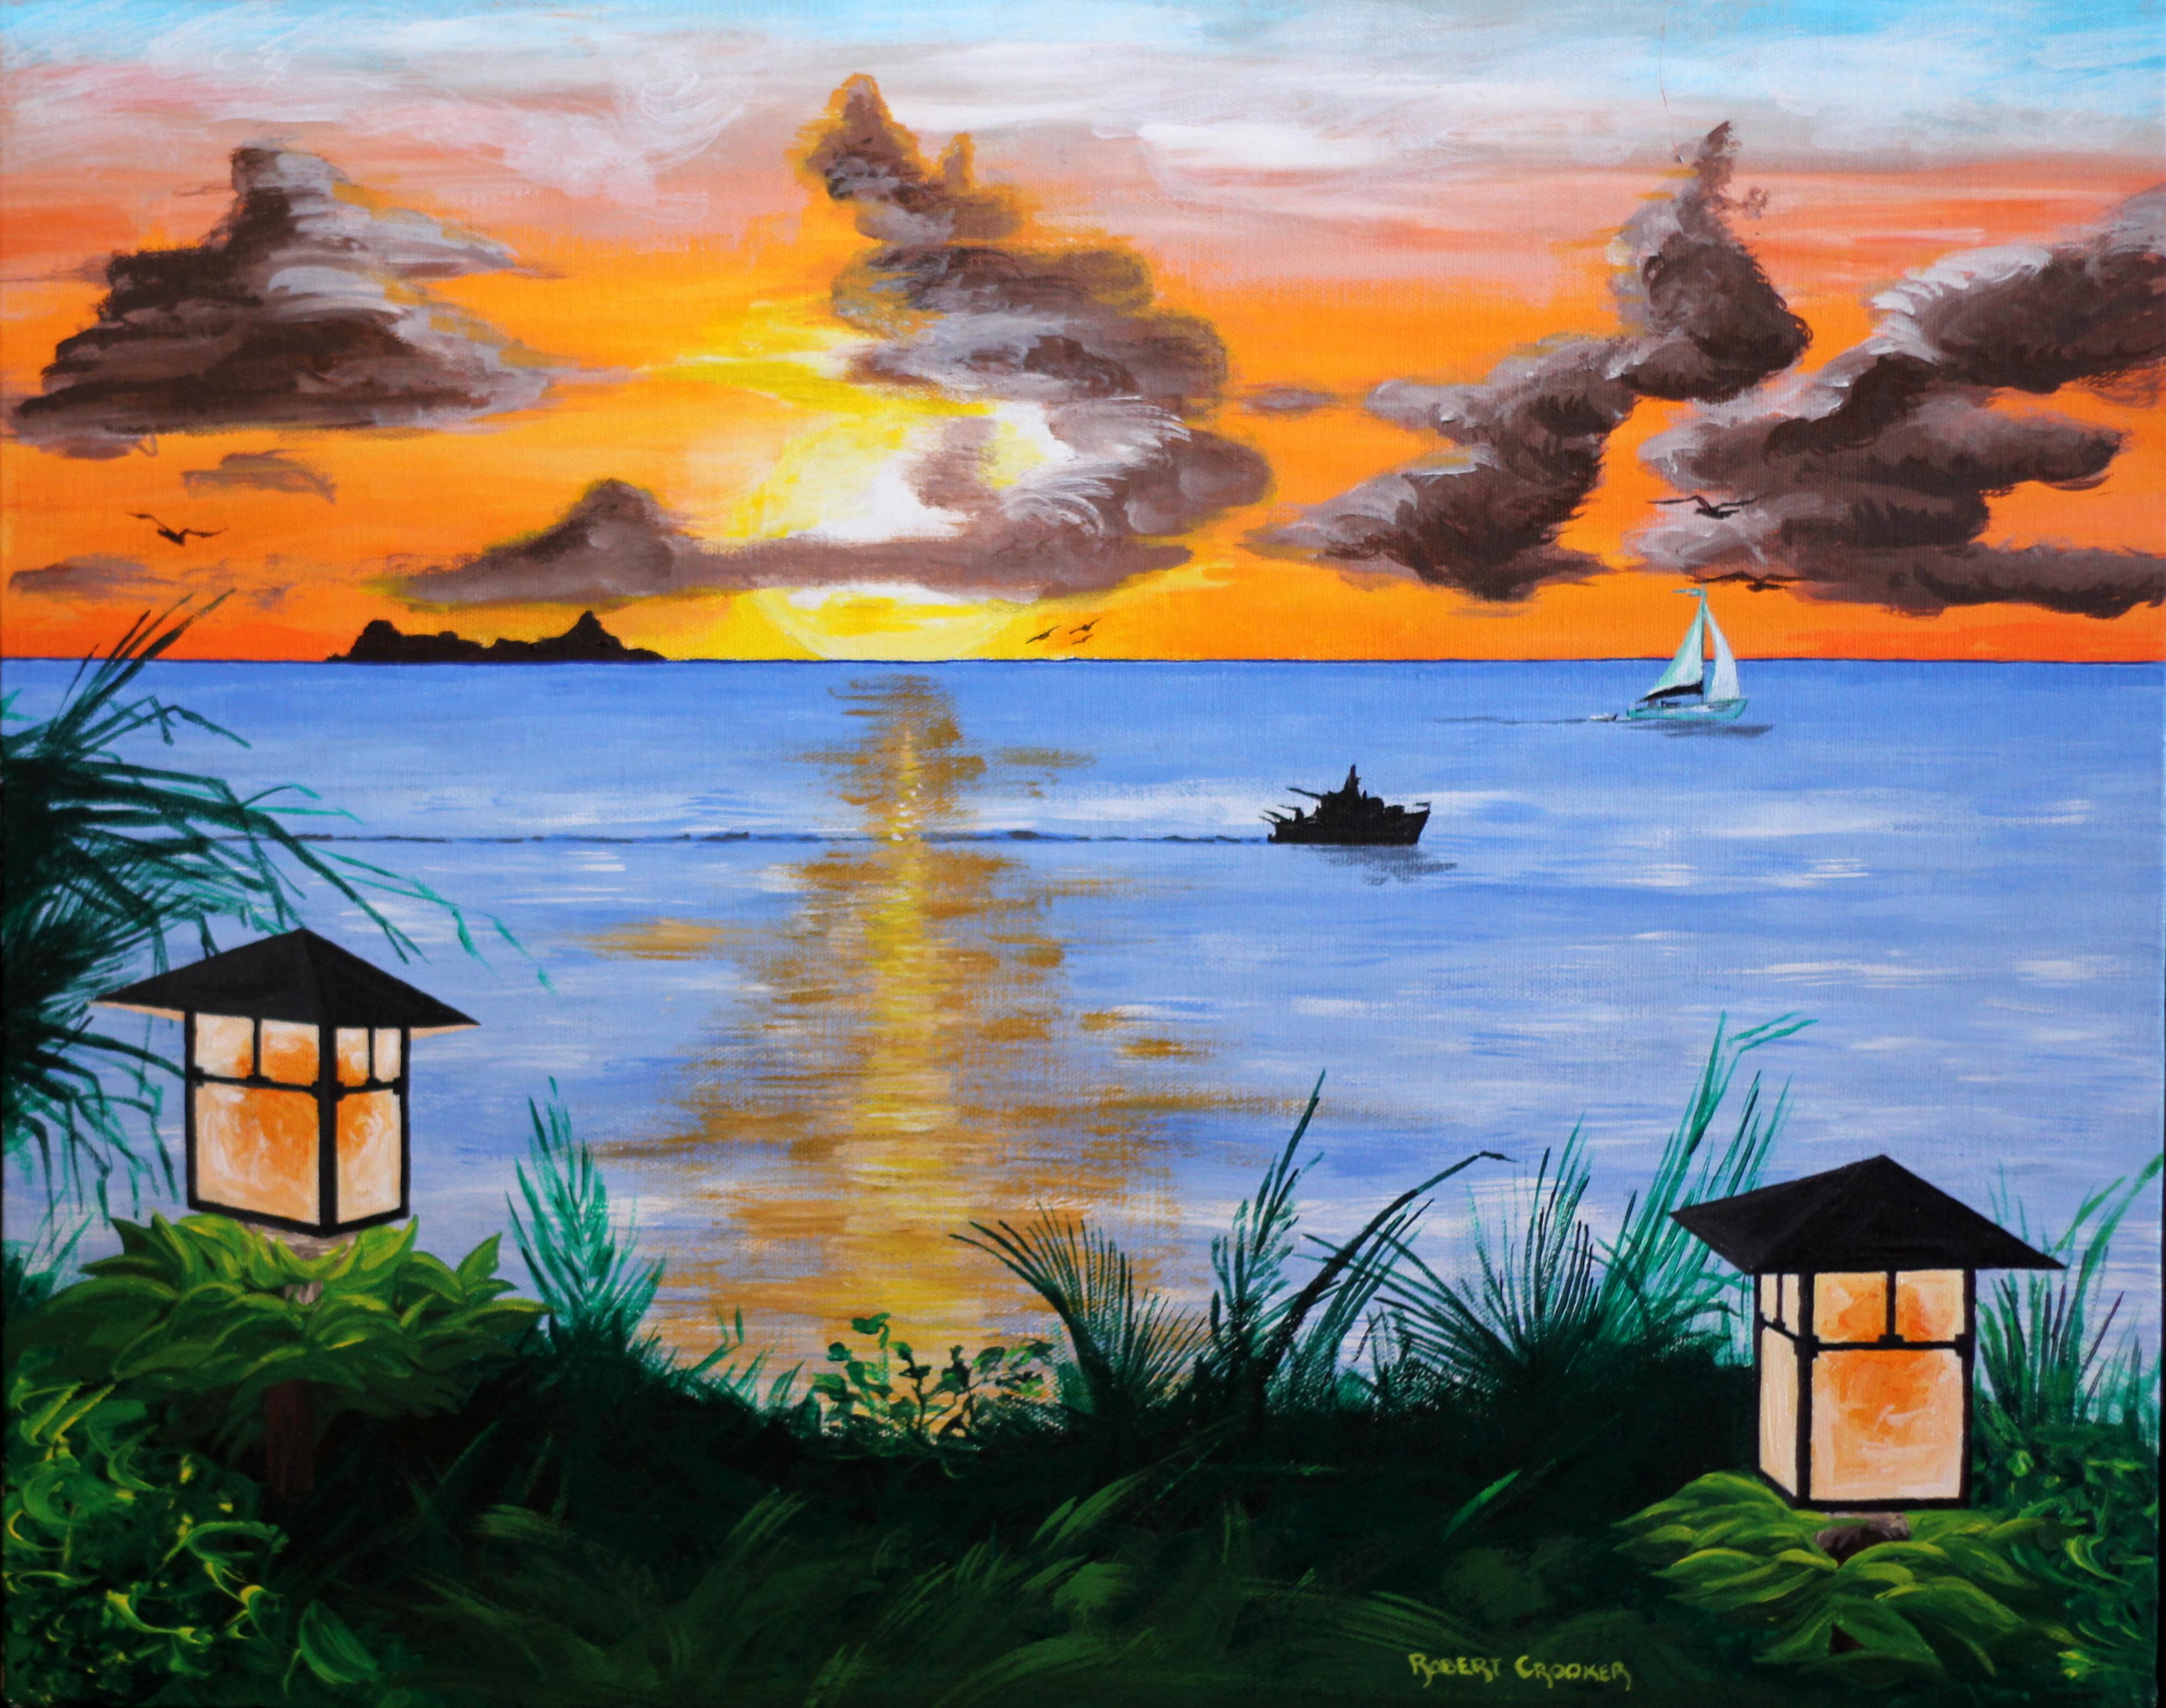 Robert Crooker Landscape Painting - Nail Bay, Original Acrylic Painting, 2013